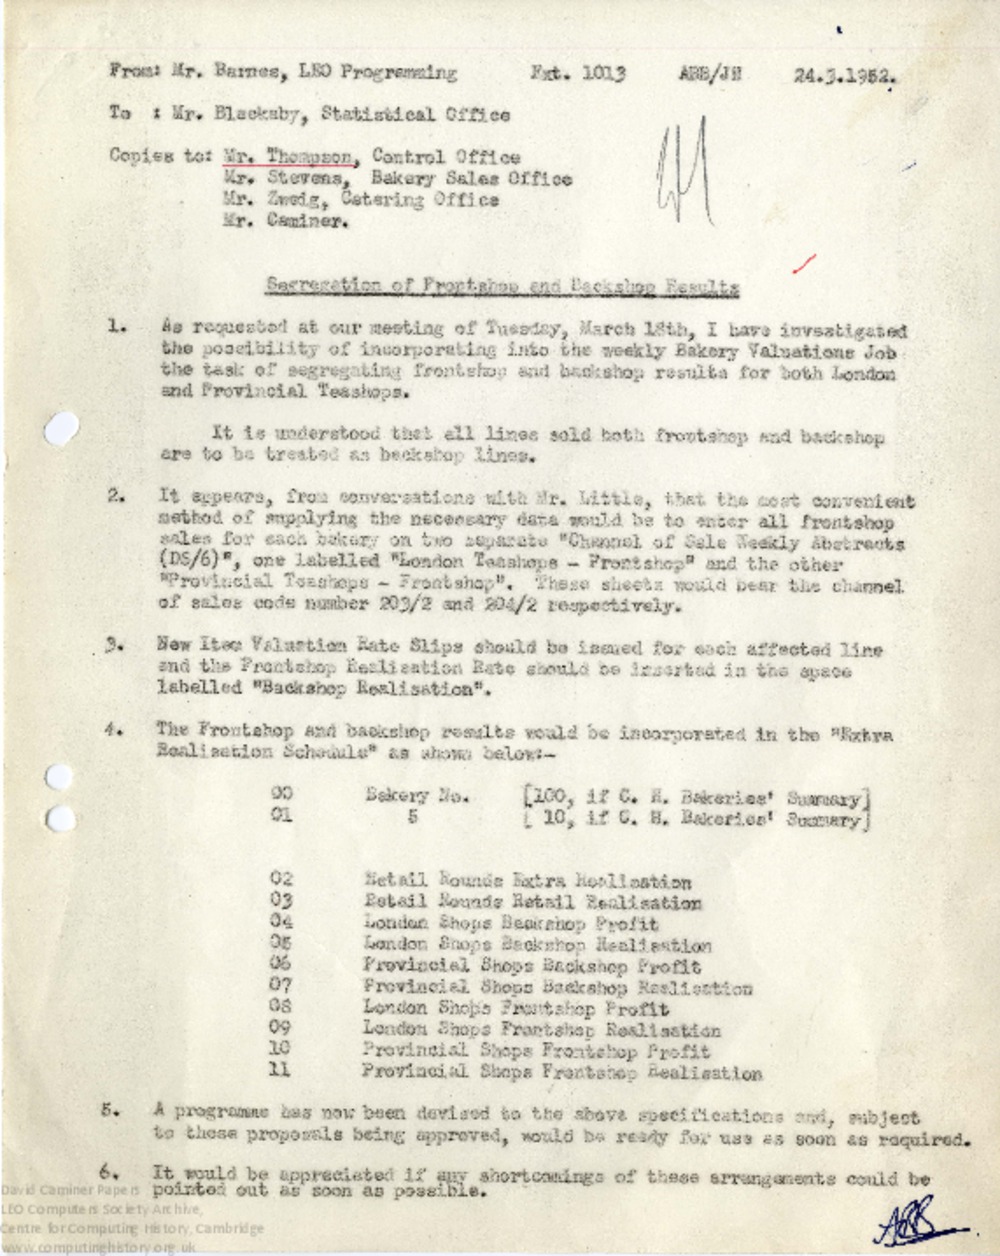 Article: Memo regarding Segregation of Frontshop and Backshop Results, 24th March 1952